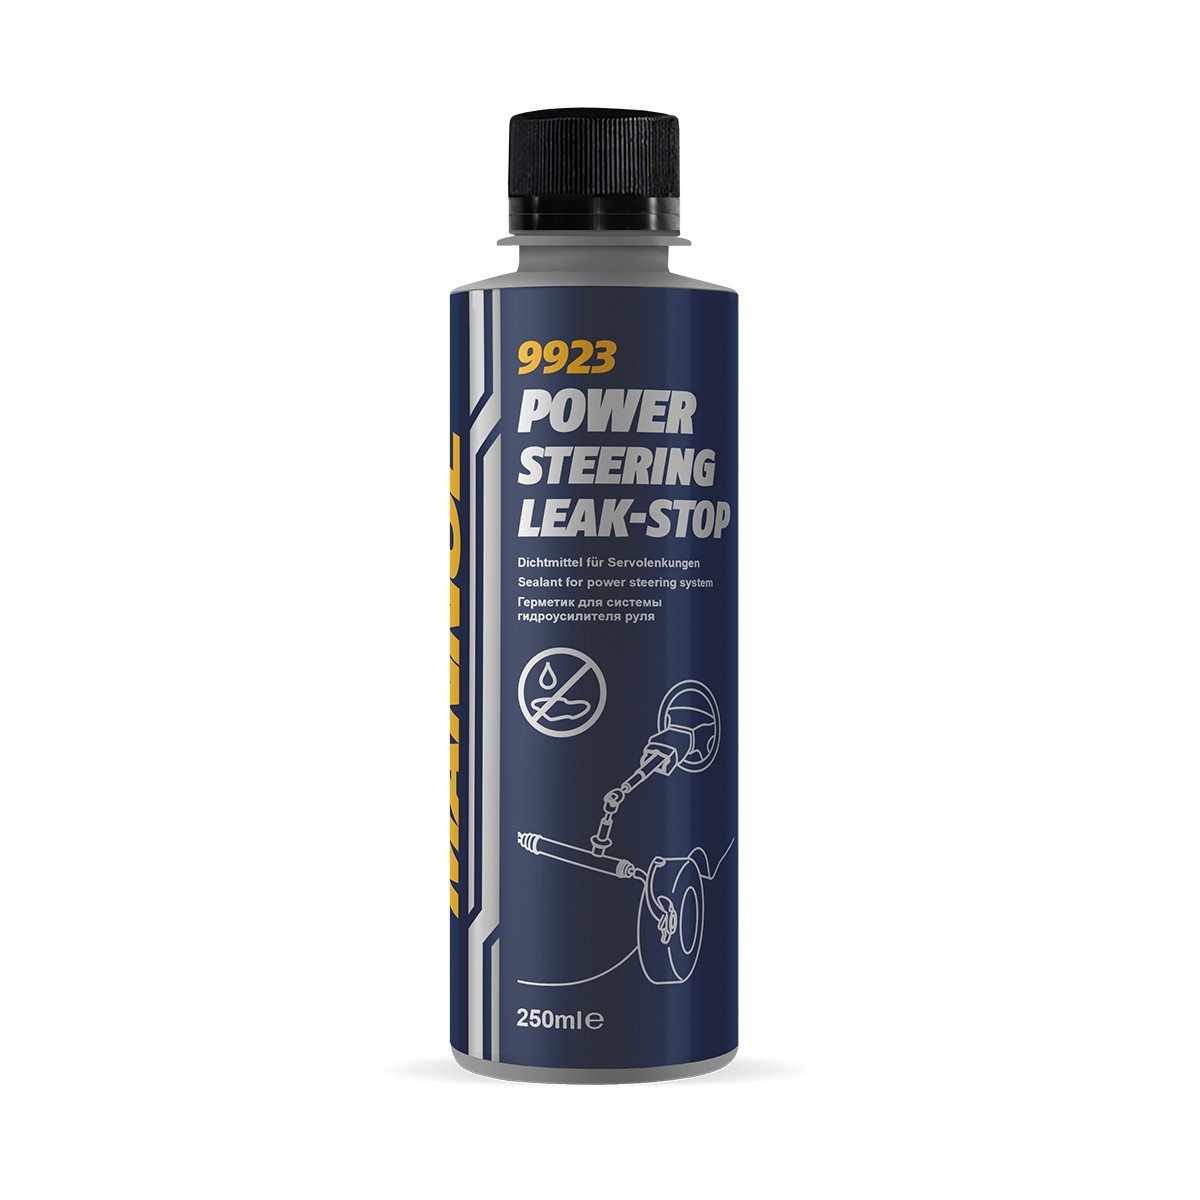 MANNOL Power Steering Leak MN9923025 Leak detection dye Bottle, Capacity: 250ml